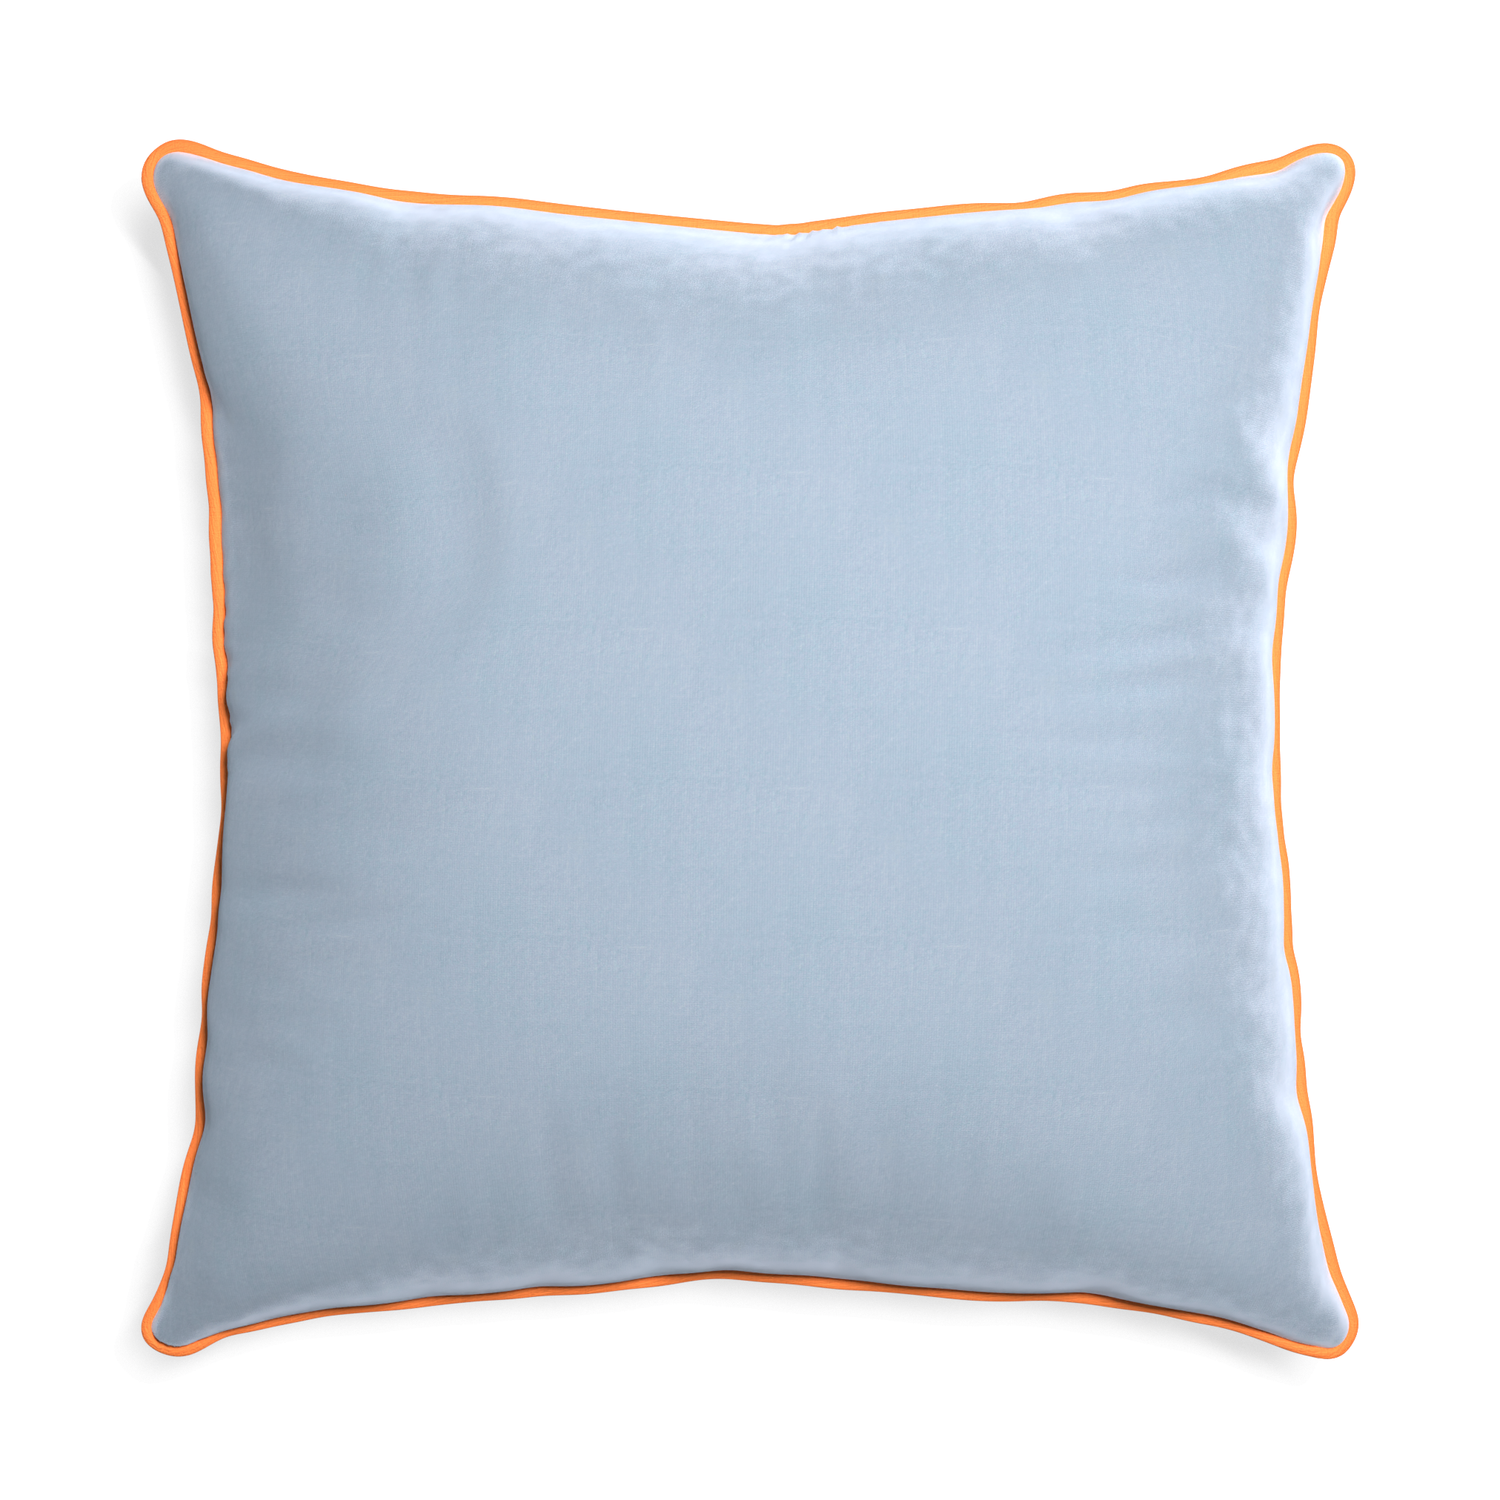 Euro-sham sky velvet custom pillow with clementine piping on white background